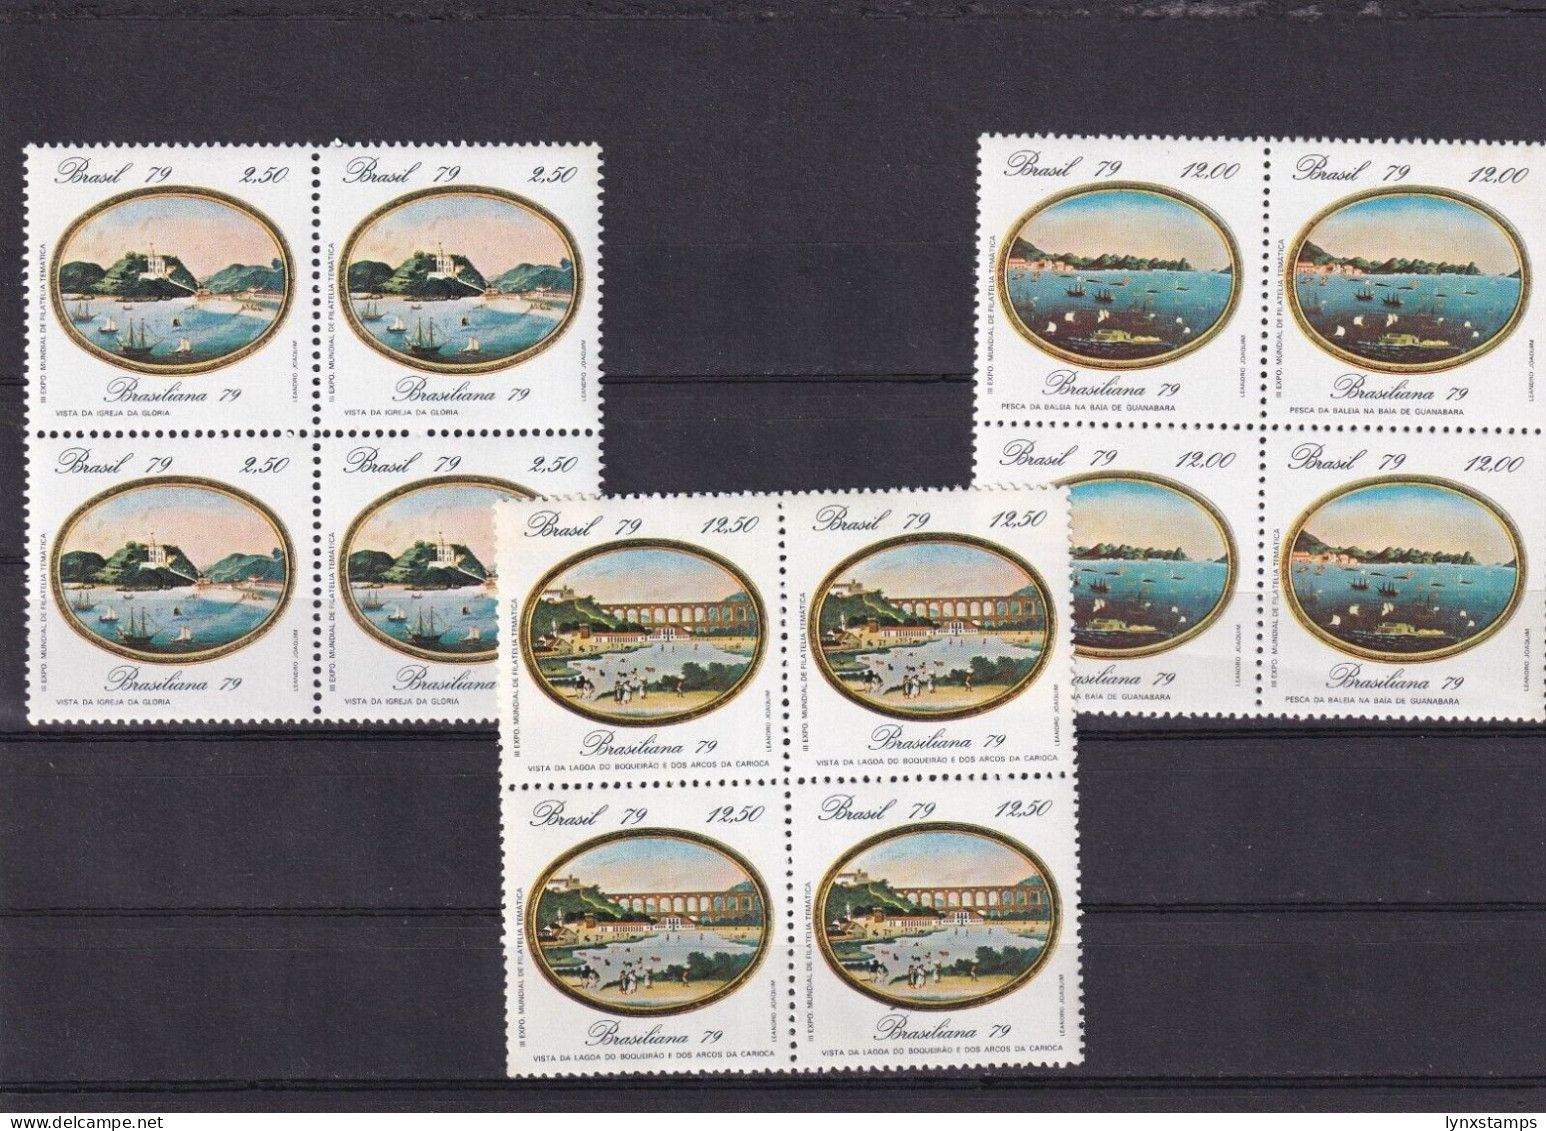 SA06 Brazil 1979 Third World Thematic Stamp Exhibition "Brasiliana 79" Blocks - Unused Stamps